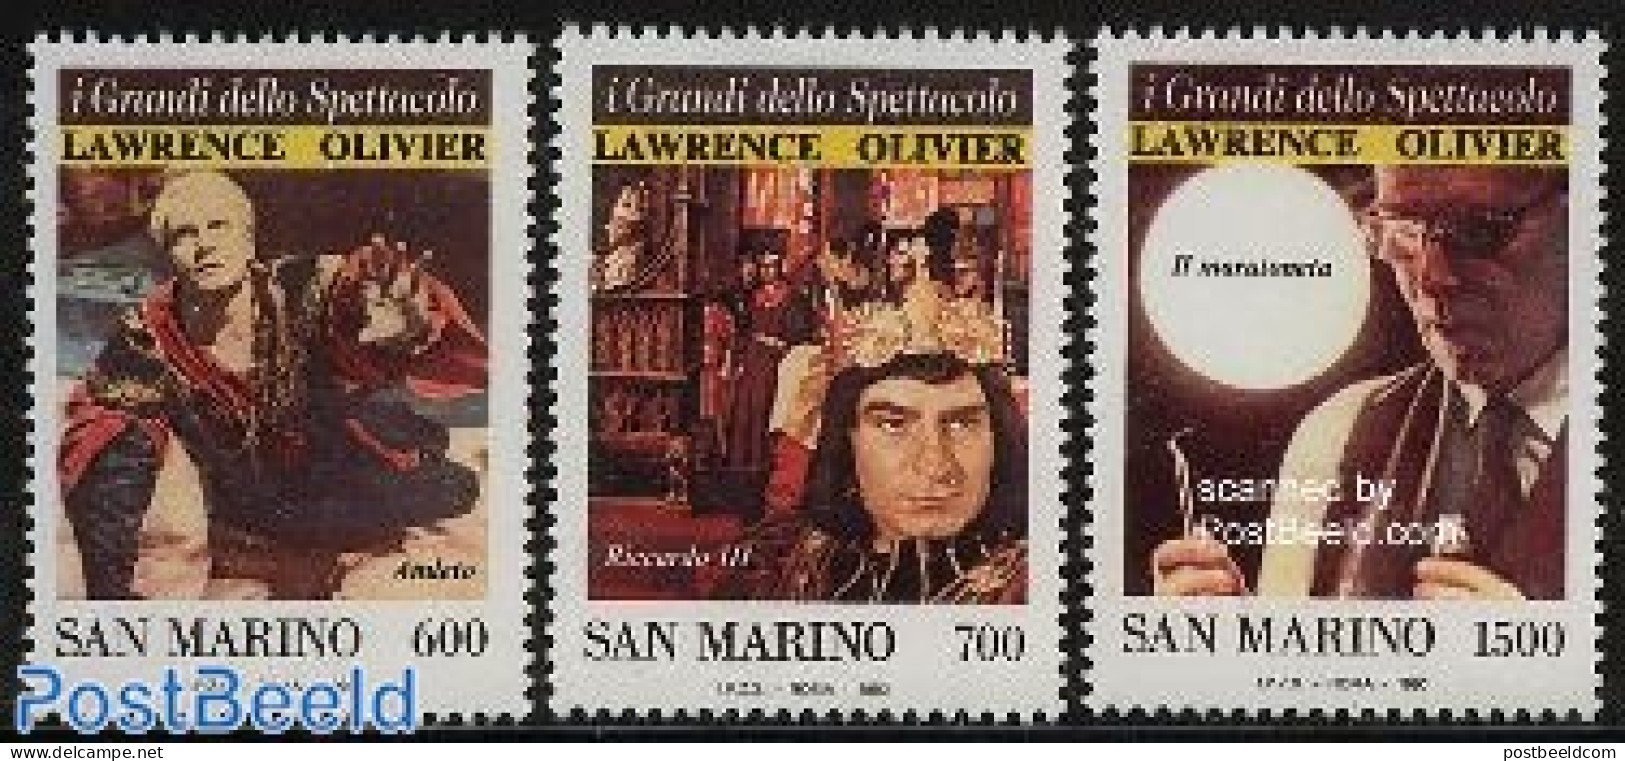 San Marino 1990 I Grandi Della Spettacolo 3v, Mint NH, Performance Art - Theatre - Ongebruikt